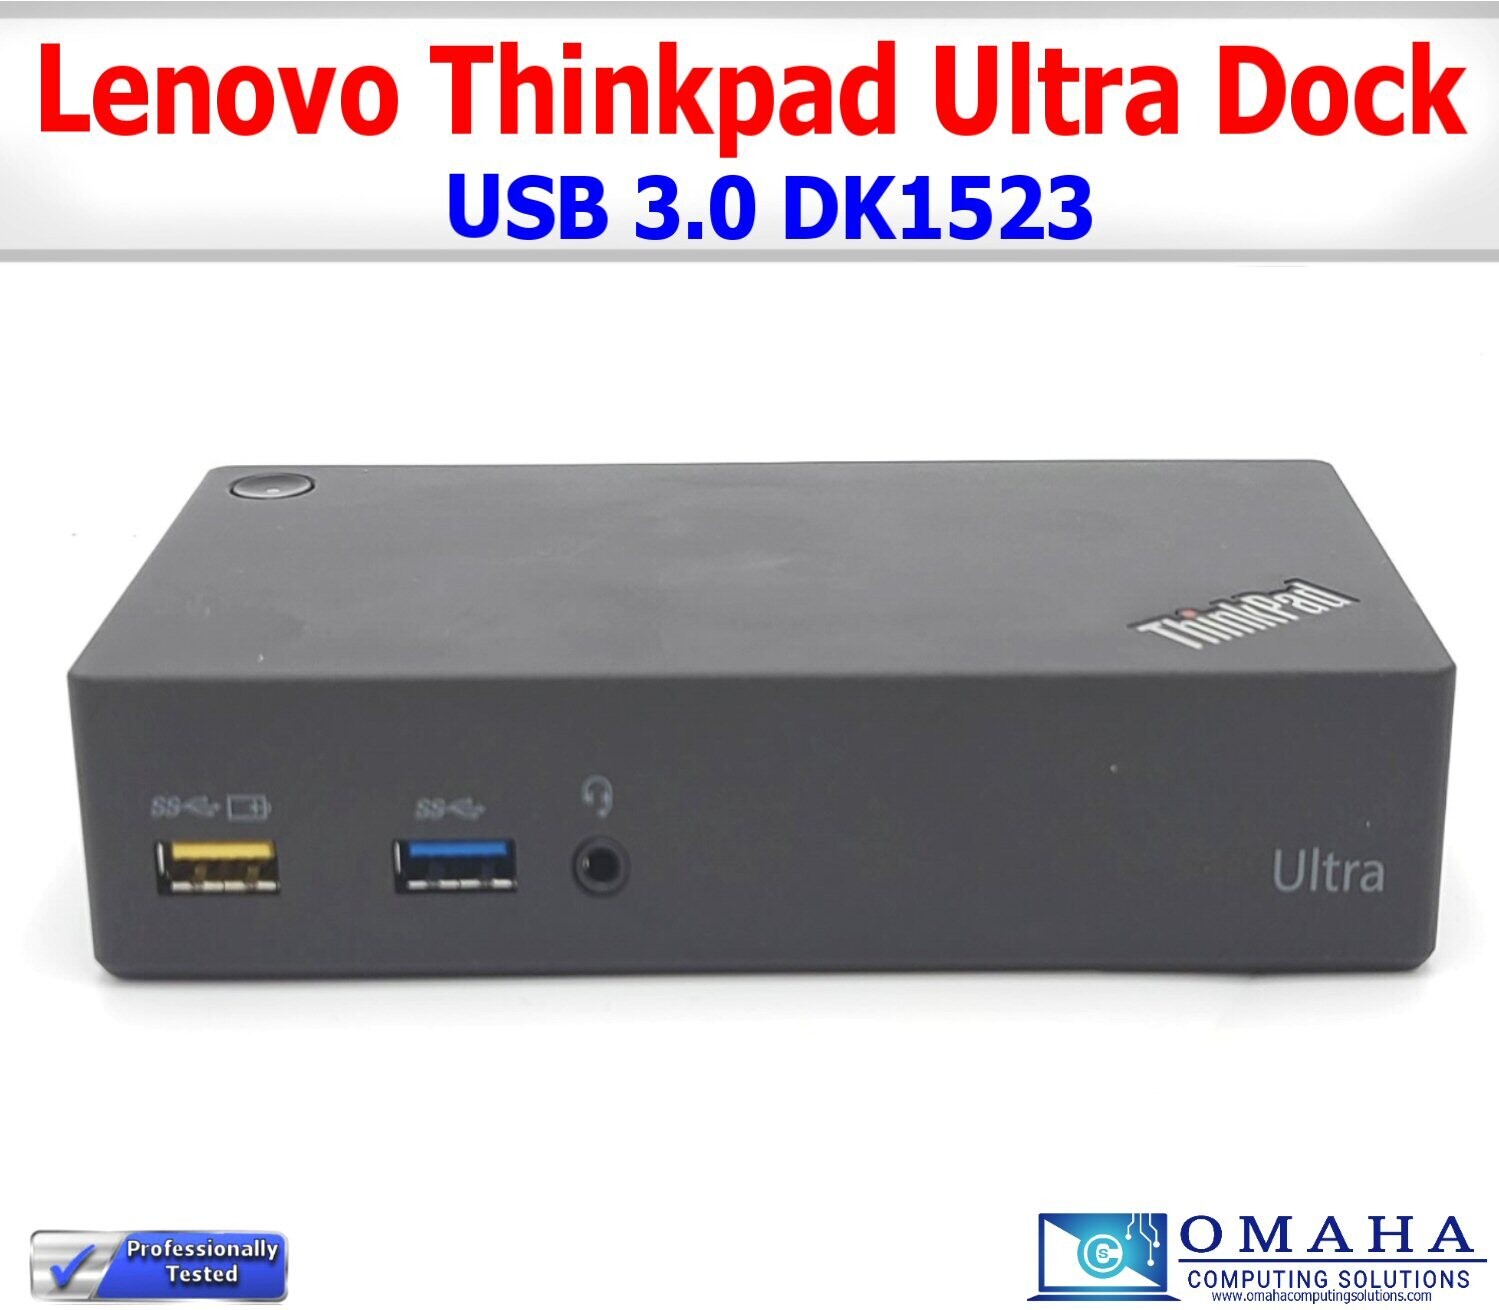 LENOVO THINKPAD USB 3.0 ULTRA DOCK DK1523 03X7131 40A8 DOCKING STATION  W/EXTRAS